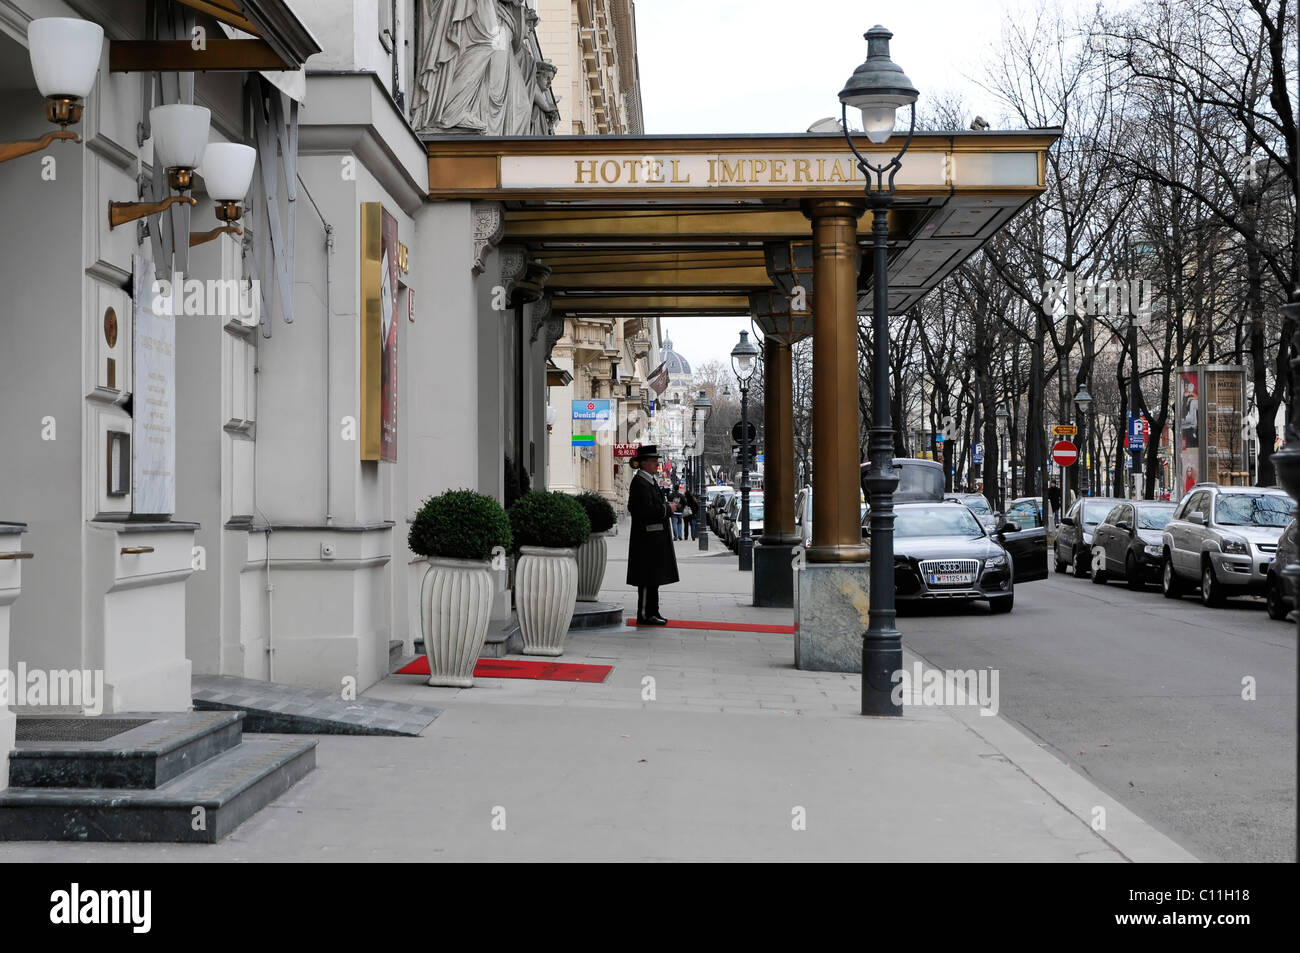 Hotel entrance, Hotel Imperial, Vienna, Austria, Europe Stock Photo